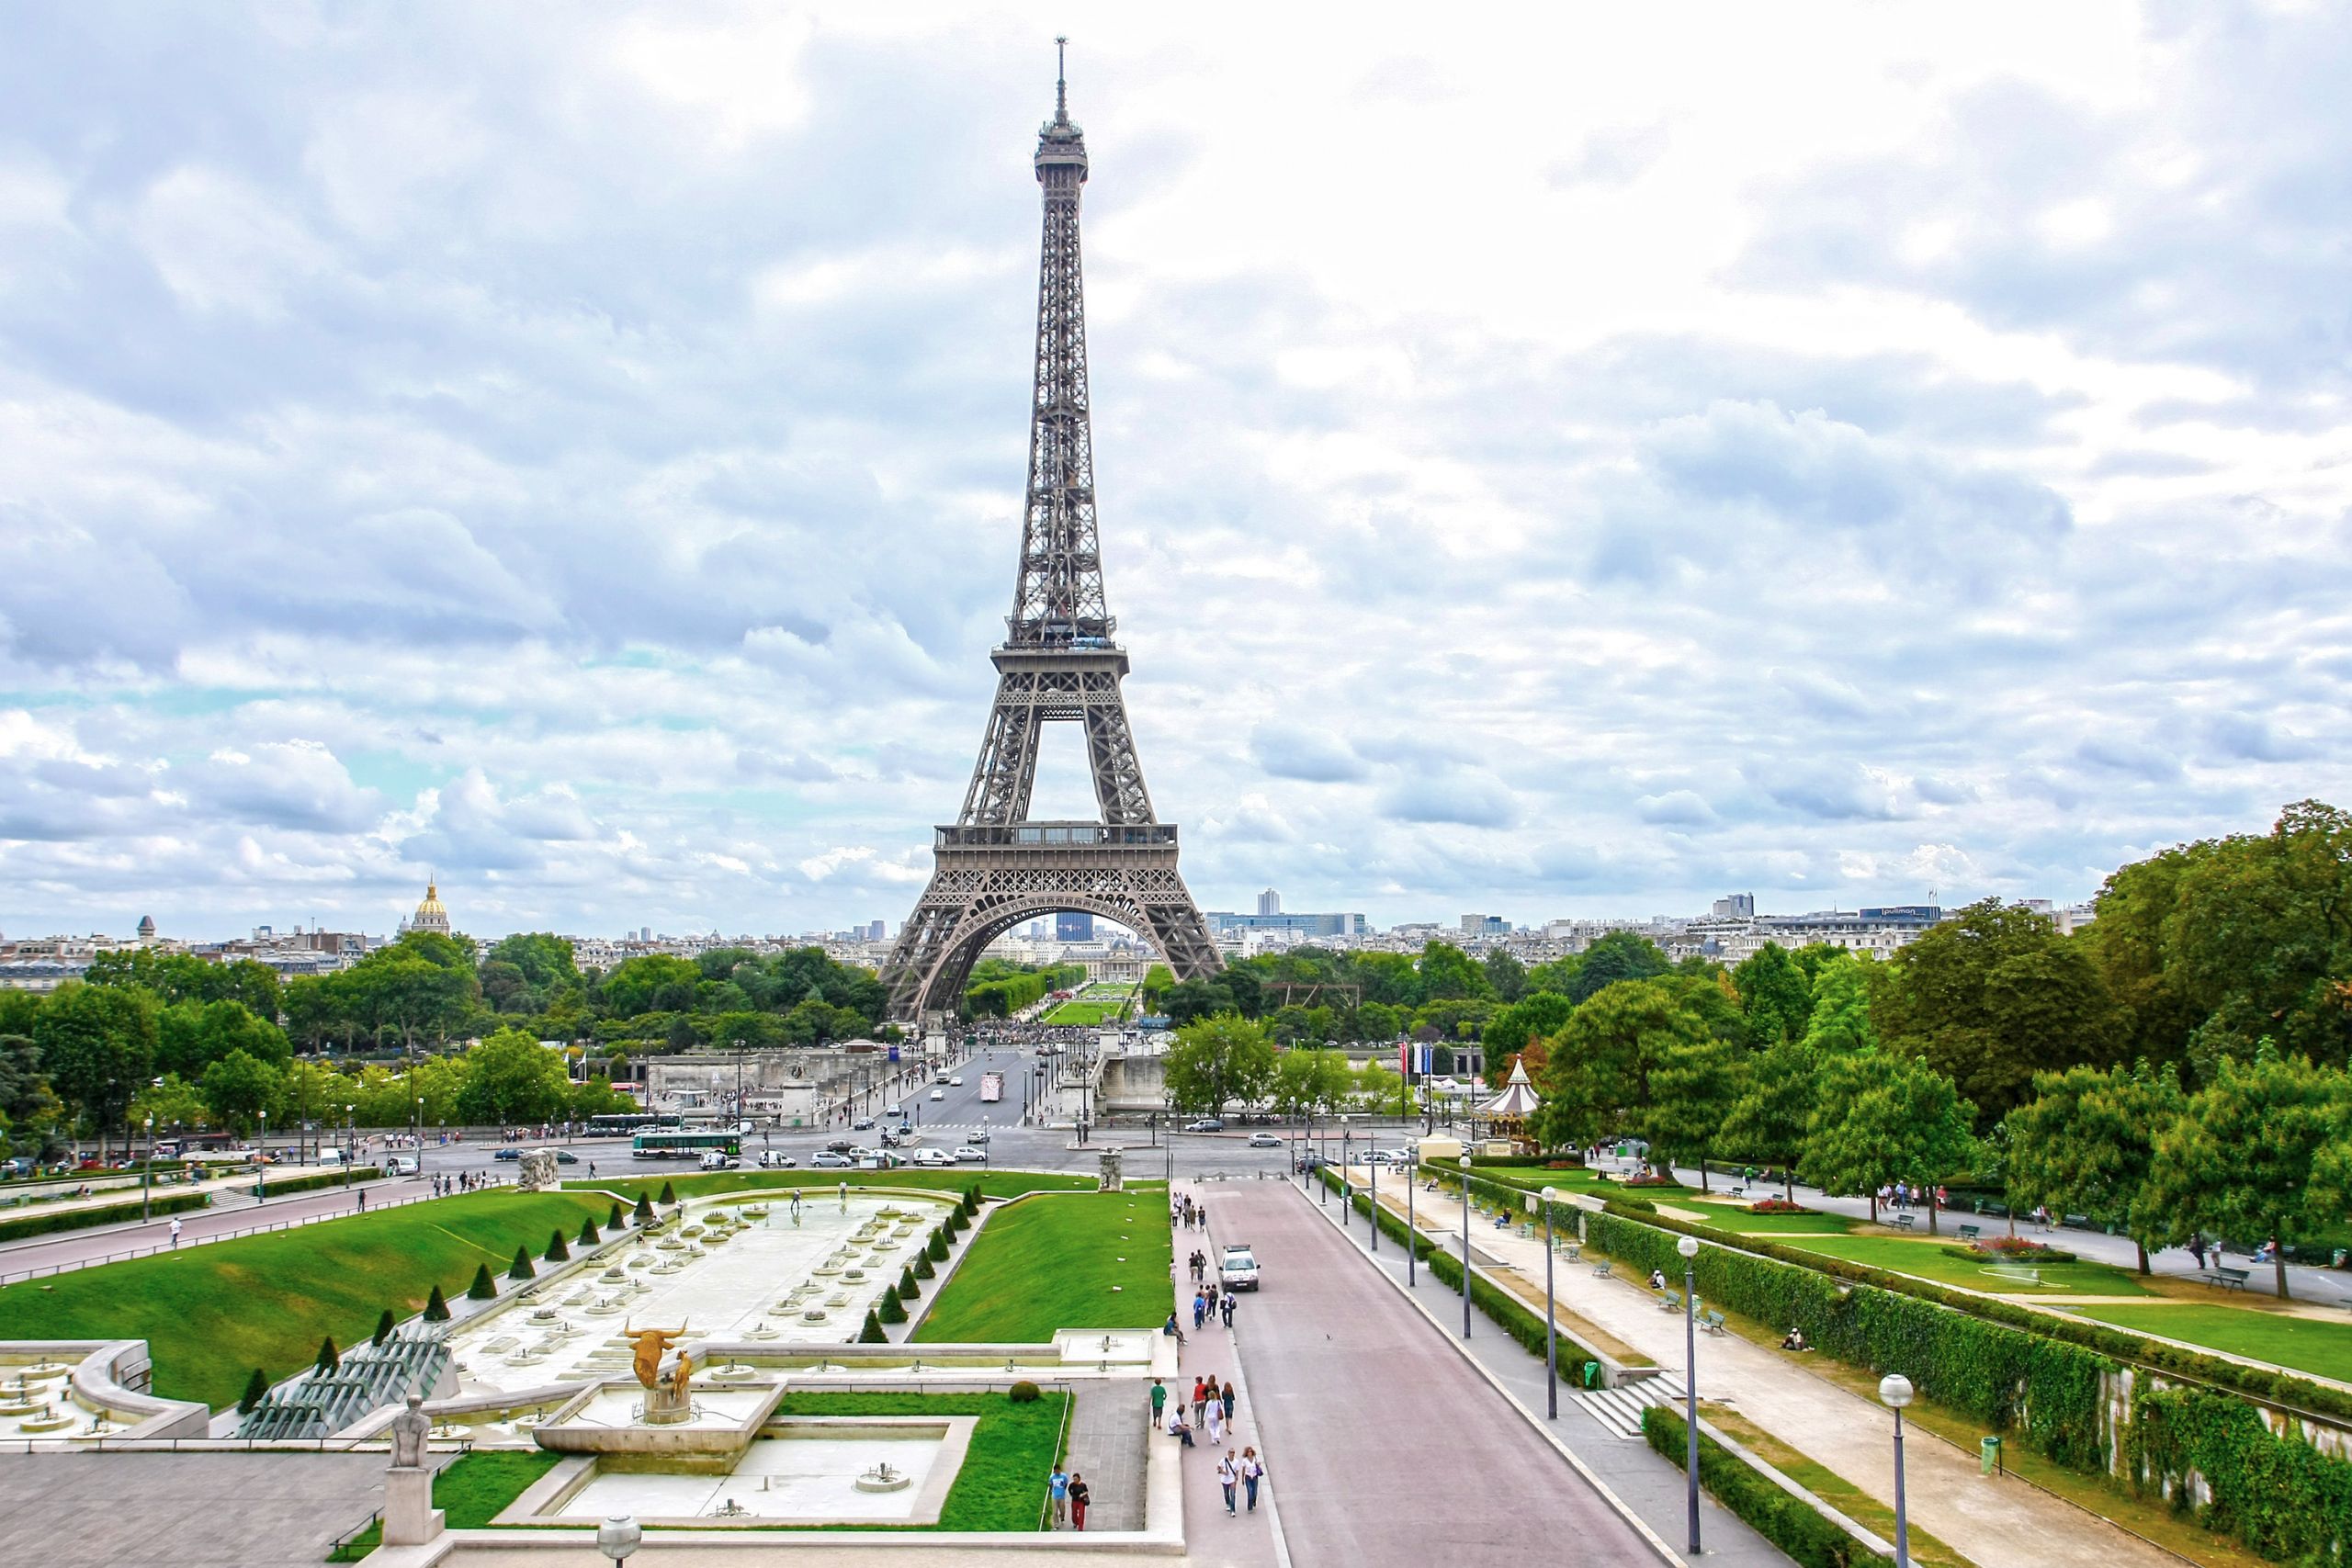 Jardin Naturel Élégant Paris Travel Guidebook –must Visit attractions In Paris